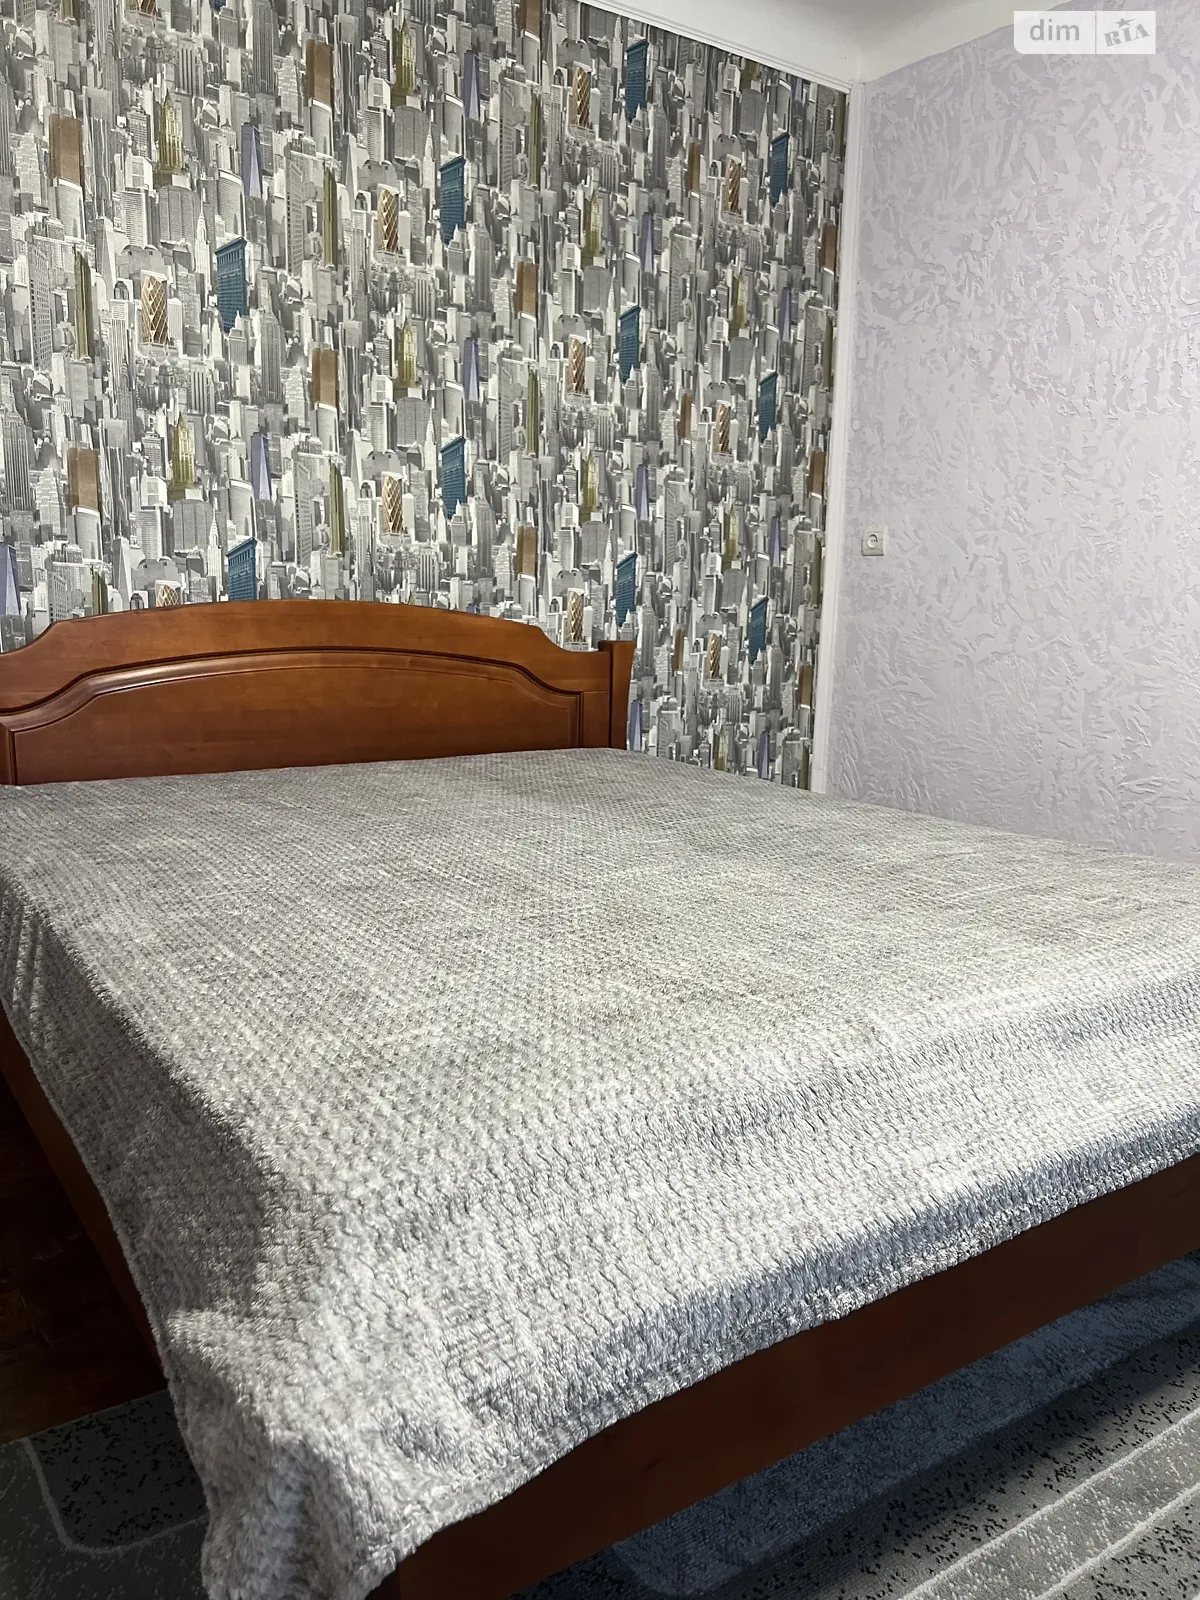 1-кімнатна квартира у Запоріжжі, цена: 700 грн